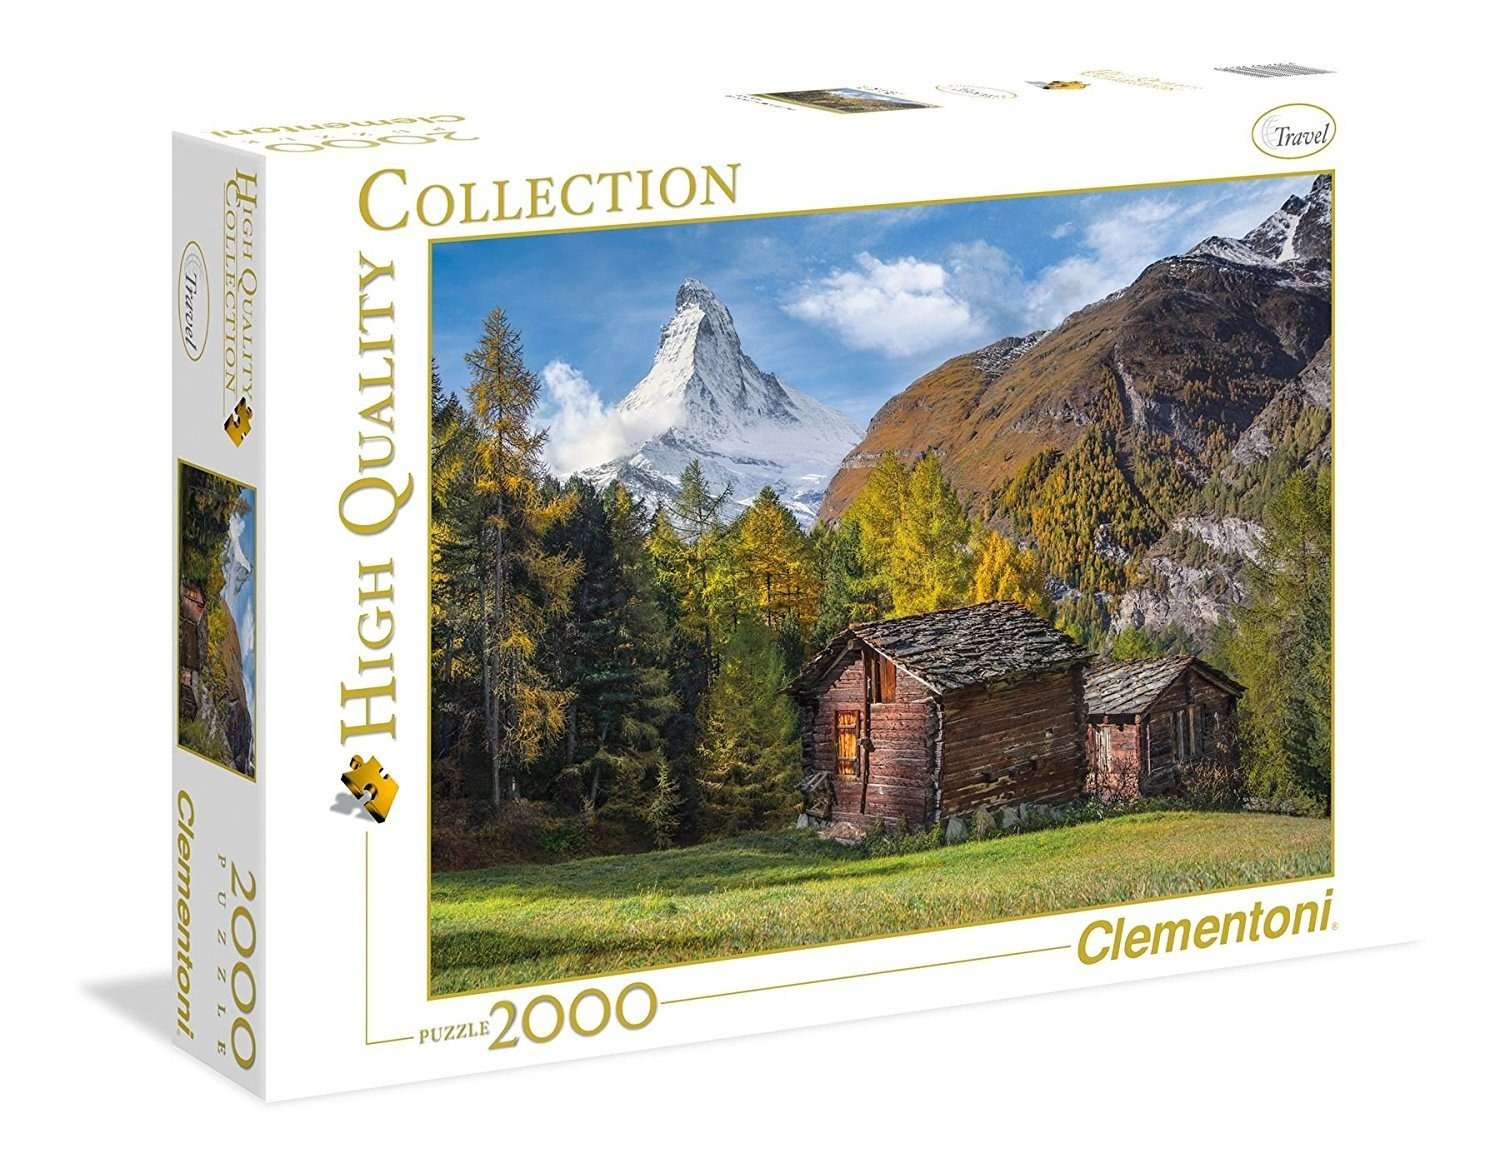 Clementoni Fascinating Matterhorn Museum Collection Puzzle Pieces